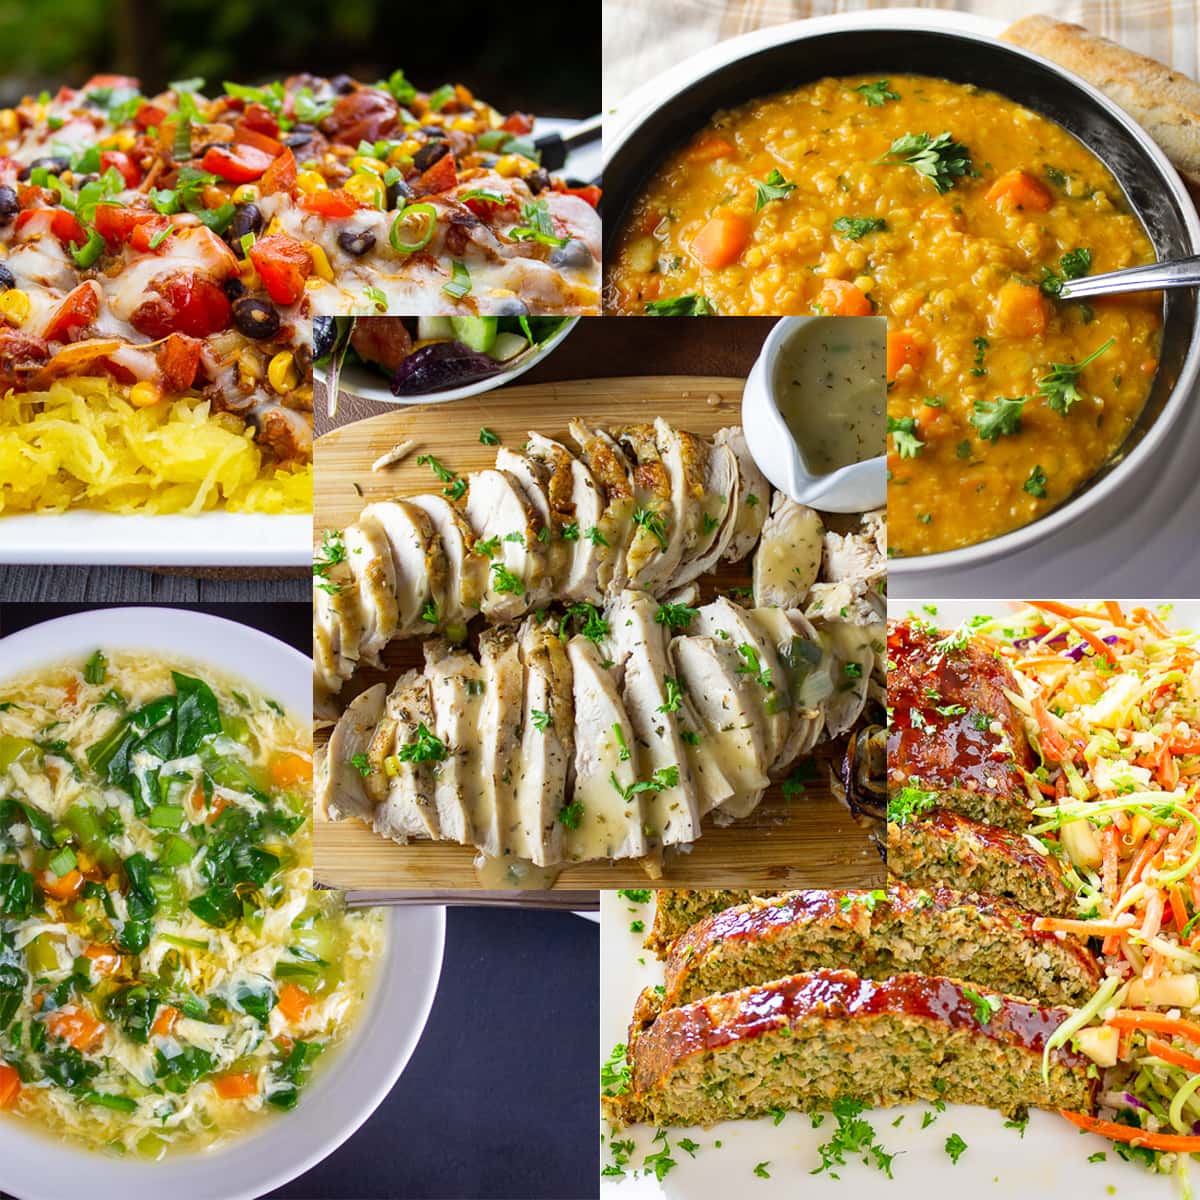 31 Delicious Meals Under 400 Calories